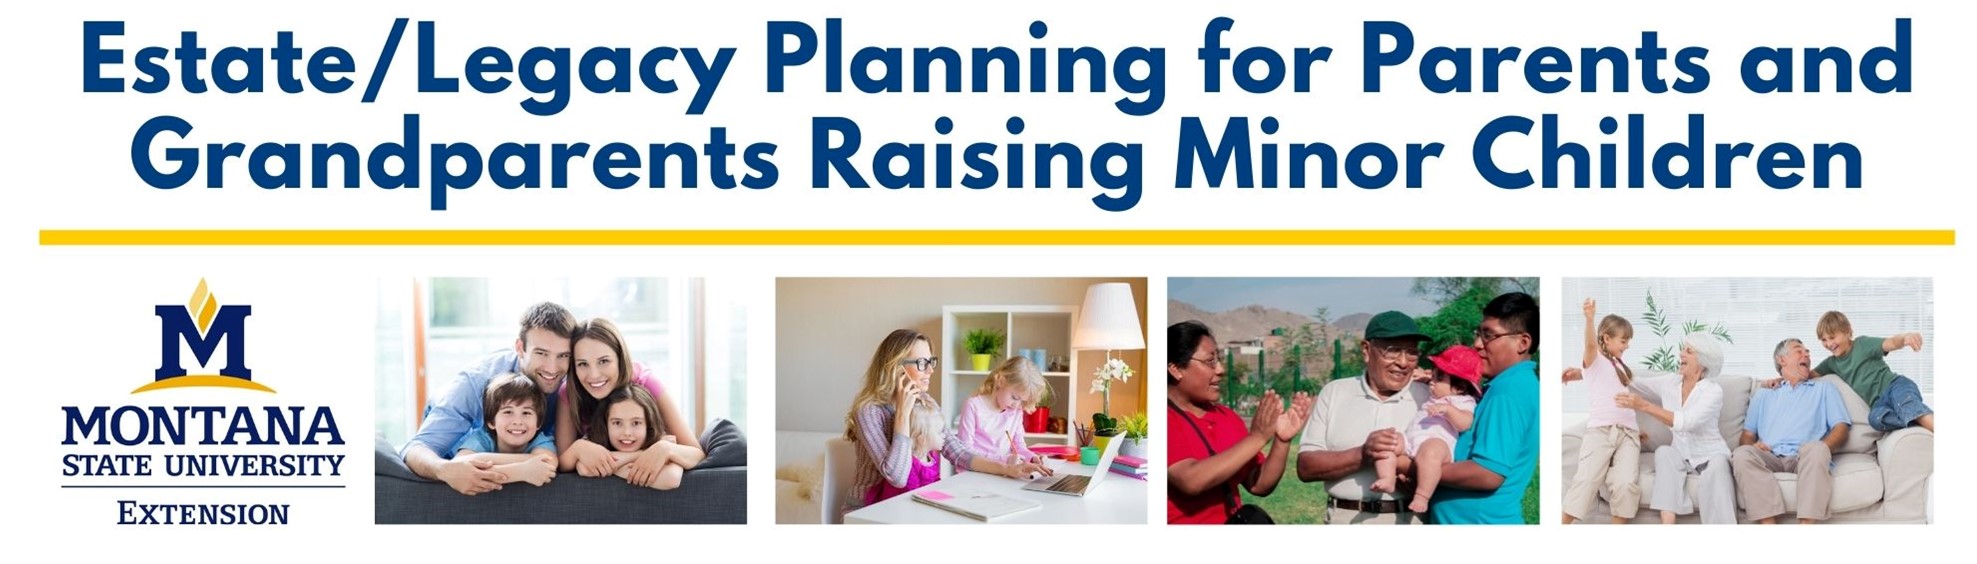 Estate Planning for Minor Children and Grandparents